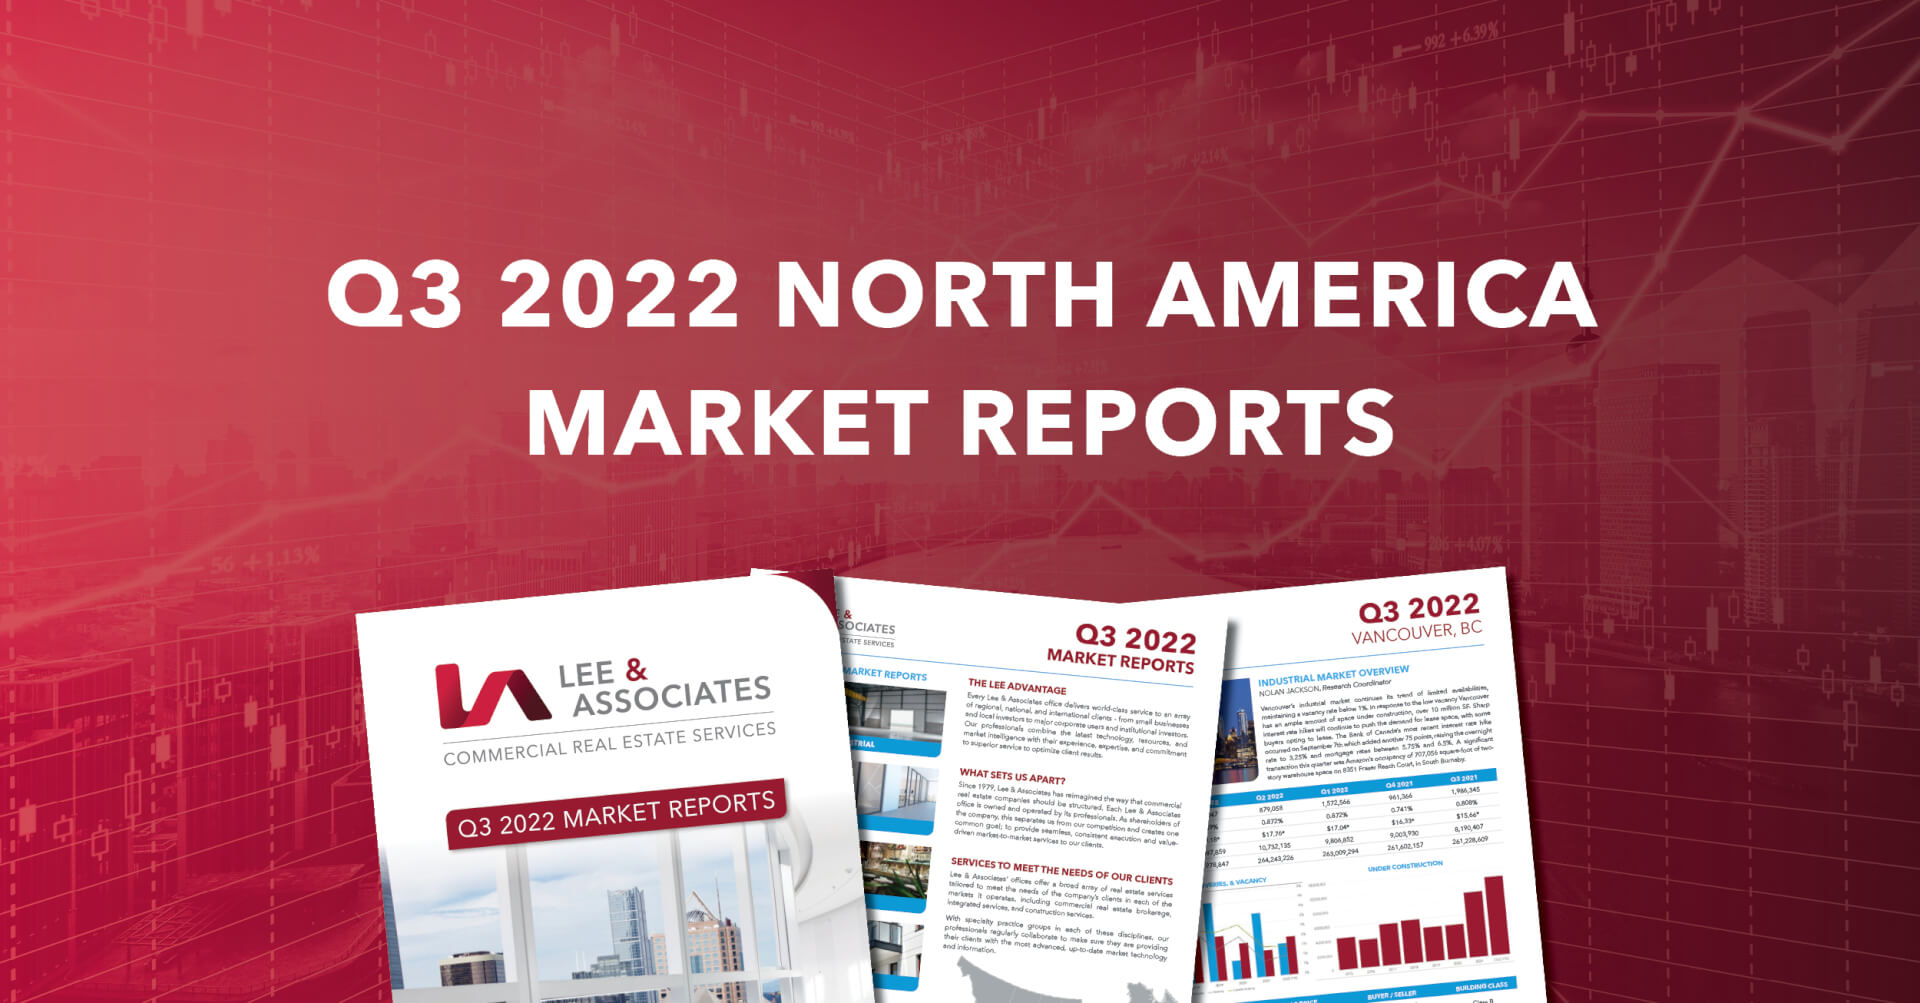 Q3 2022 North America Market Reports Released